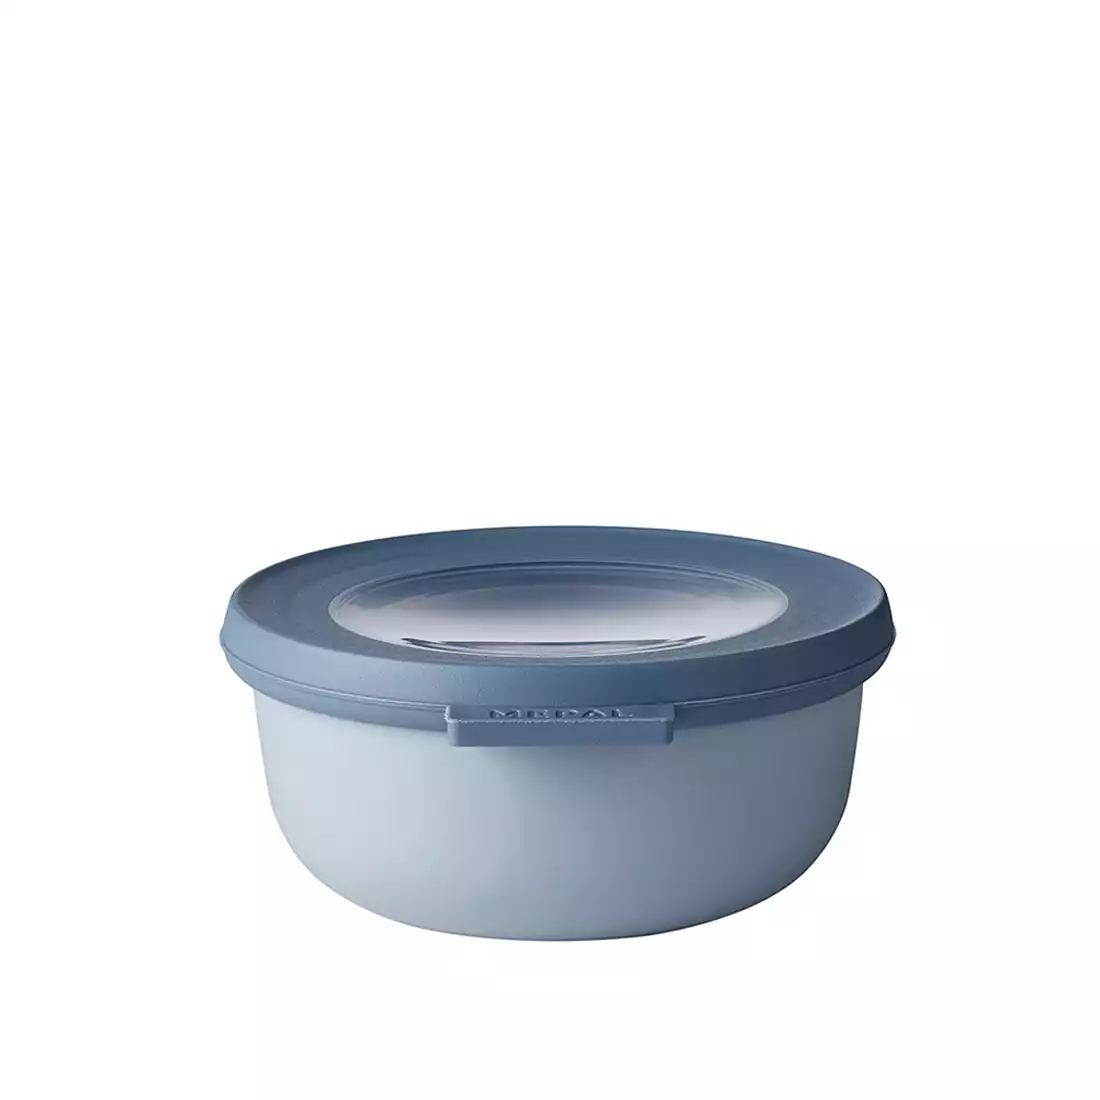 MEPAL CIRQULA round bowl 350 ml, nordic blue